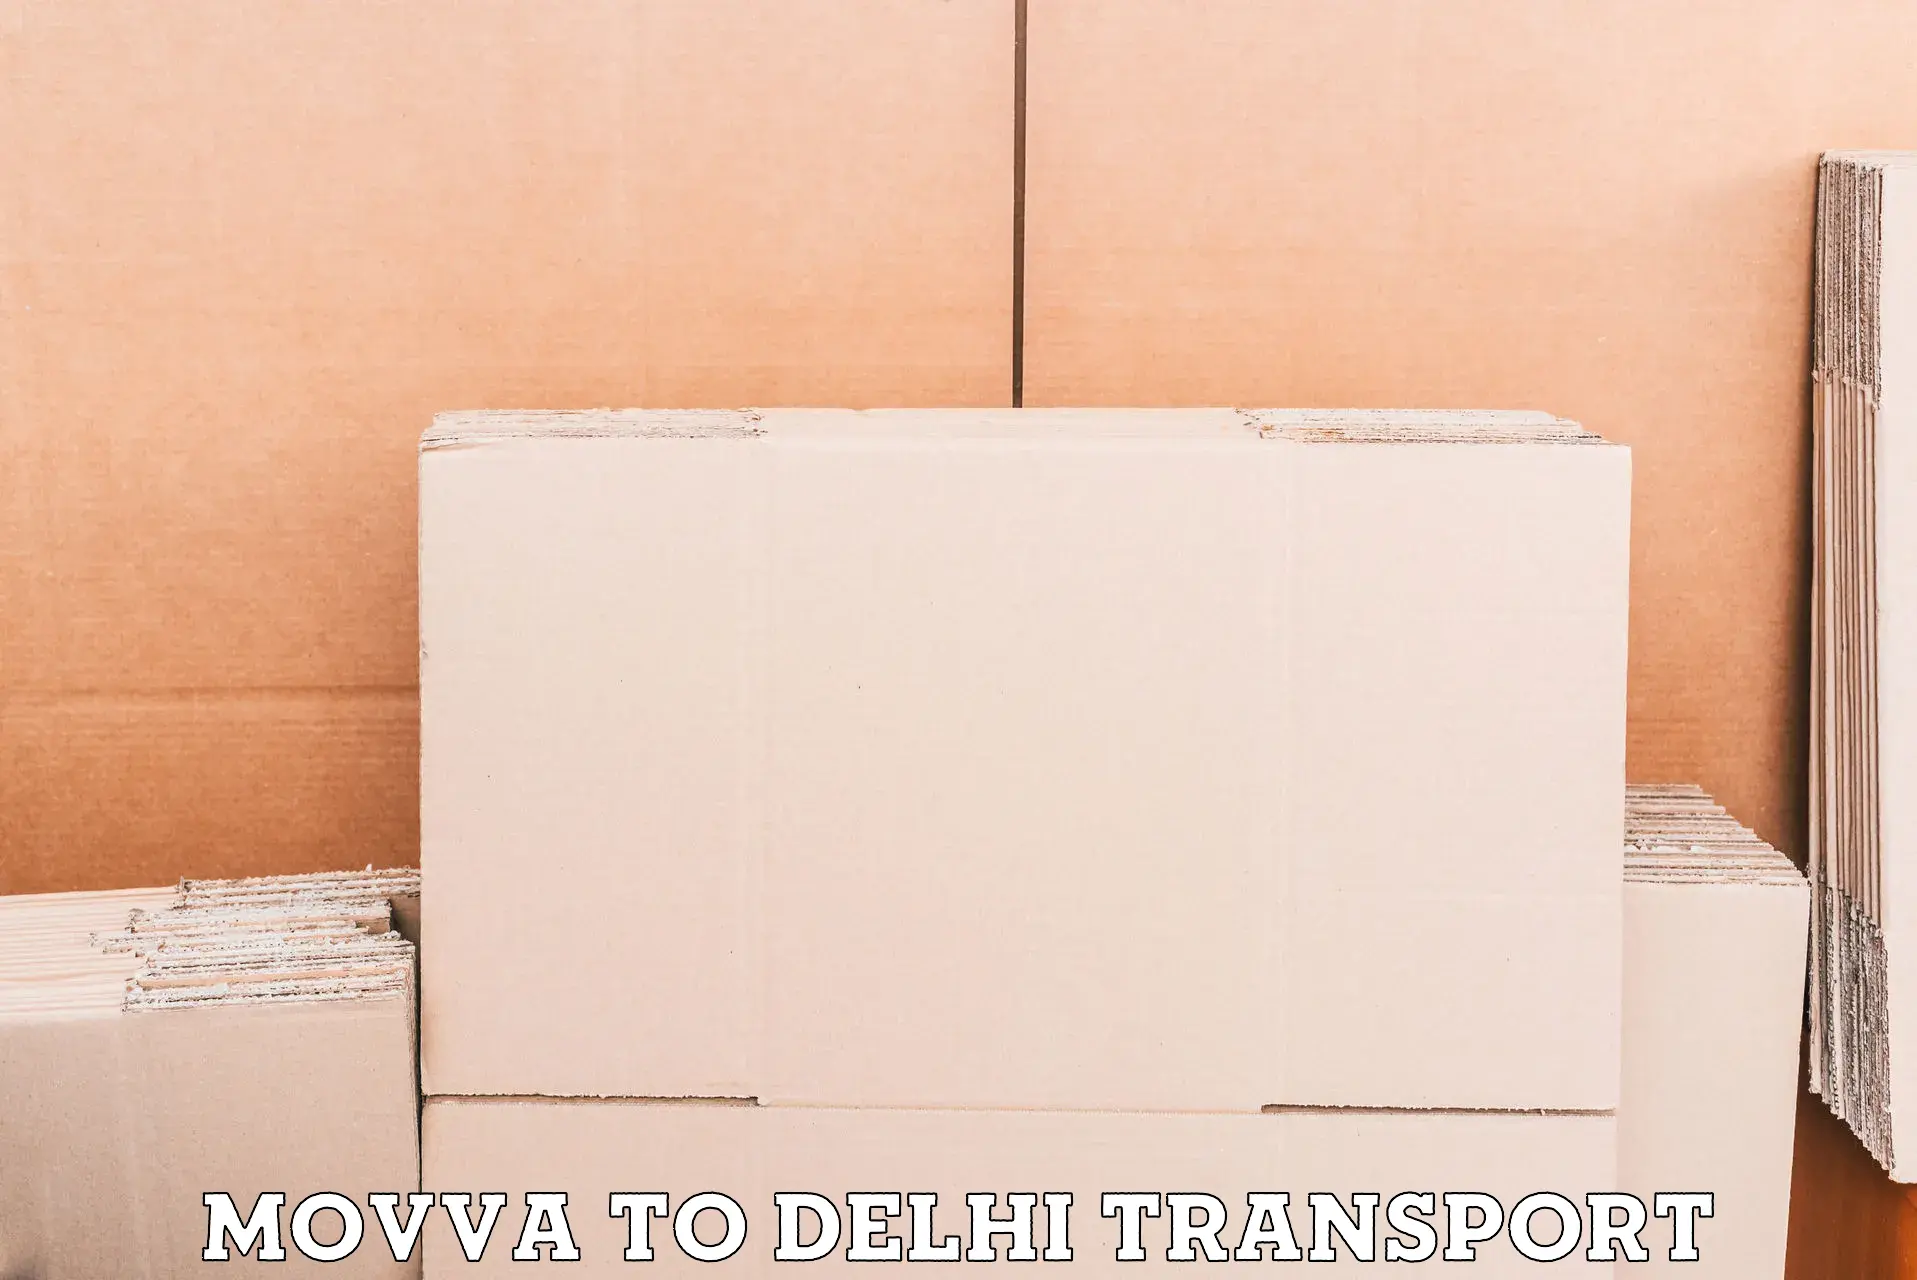 Nearest transport service Movva to Ashok Vihar